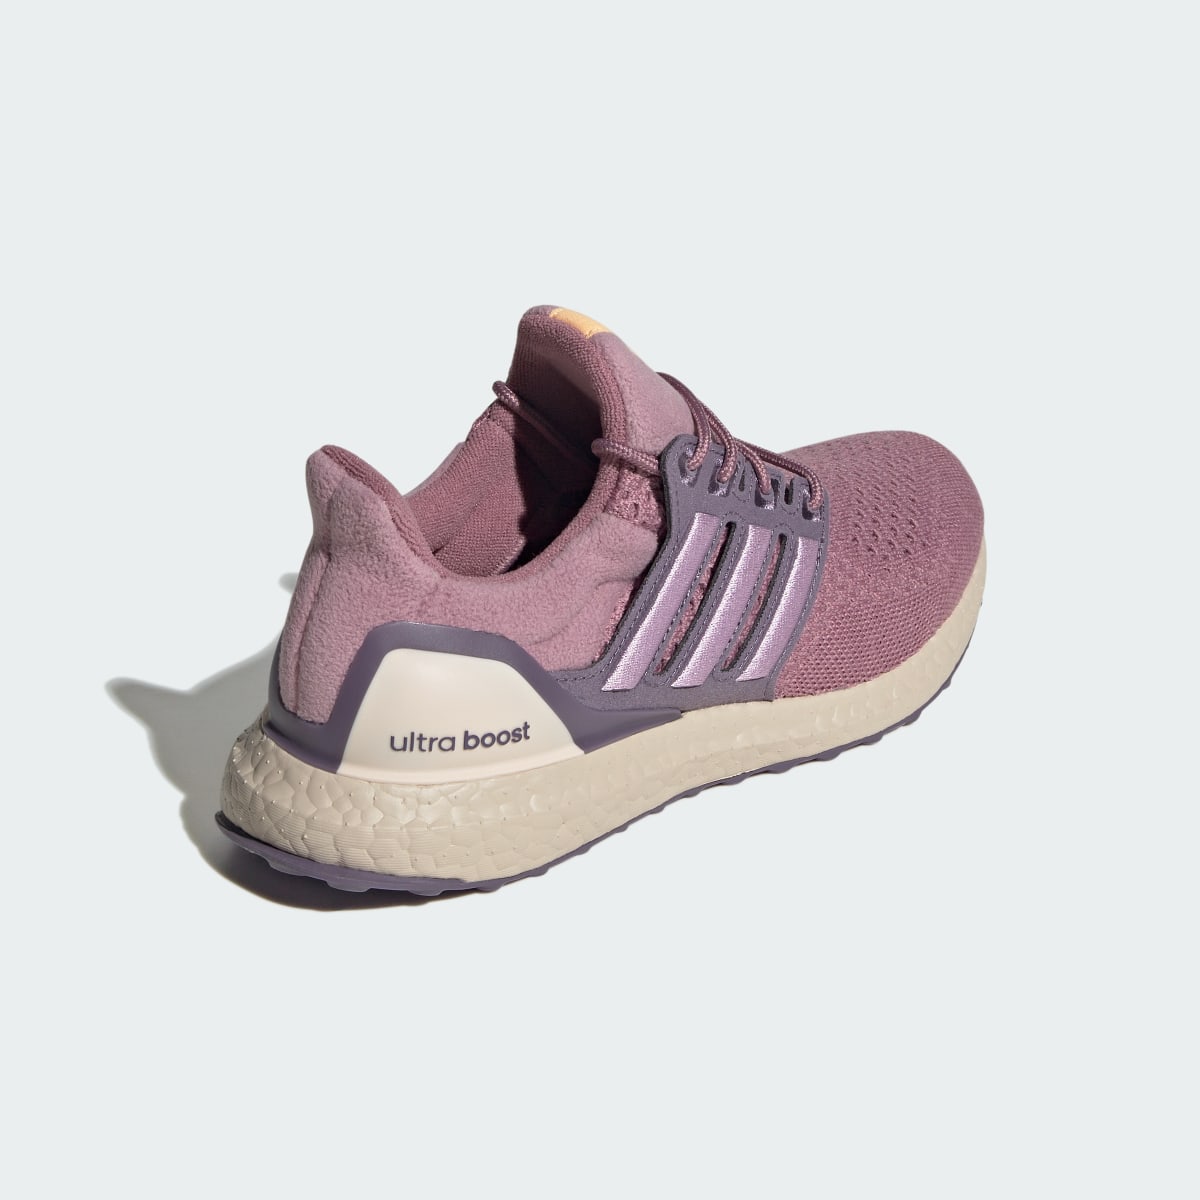 Adidas Ultraboost 1.0 Ayakkabı. 6